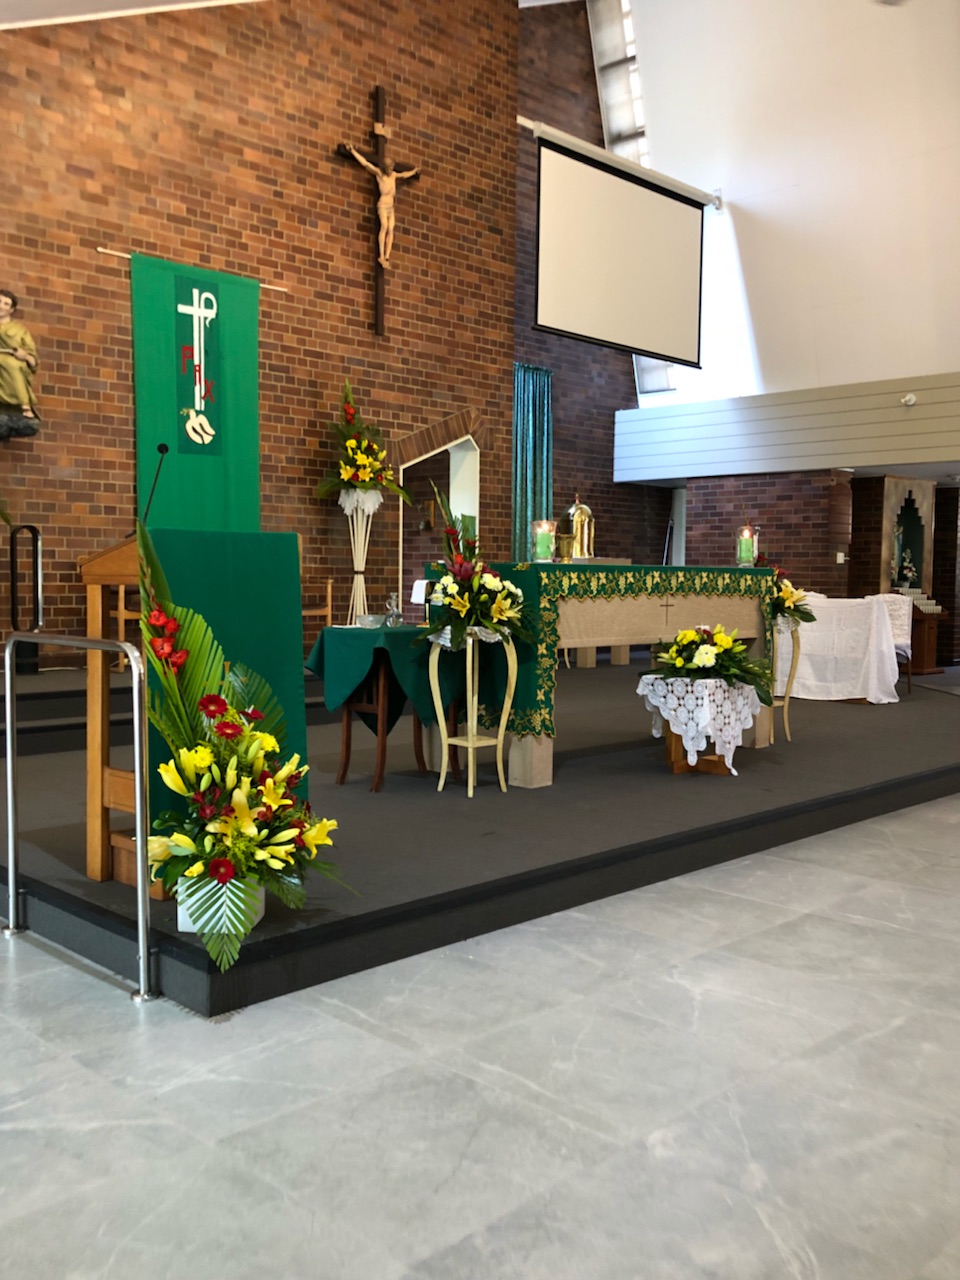 St Mark’s Catholic Parish | church | 96 Lilac St, Inala QLD 4077, Australia | 0733725658 OR +61 7 3372 5658